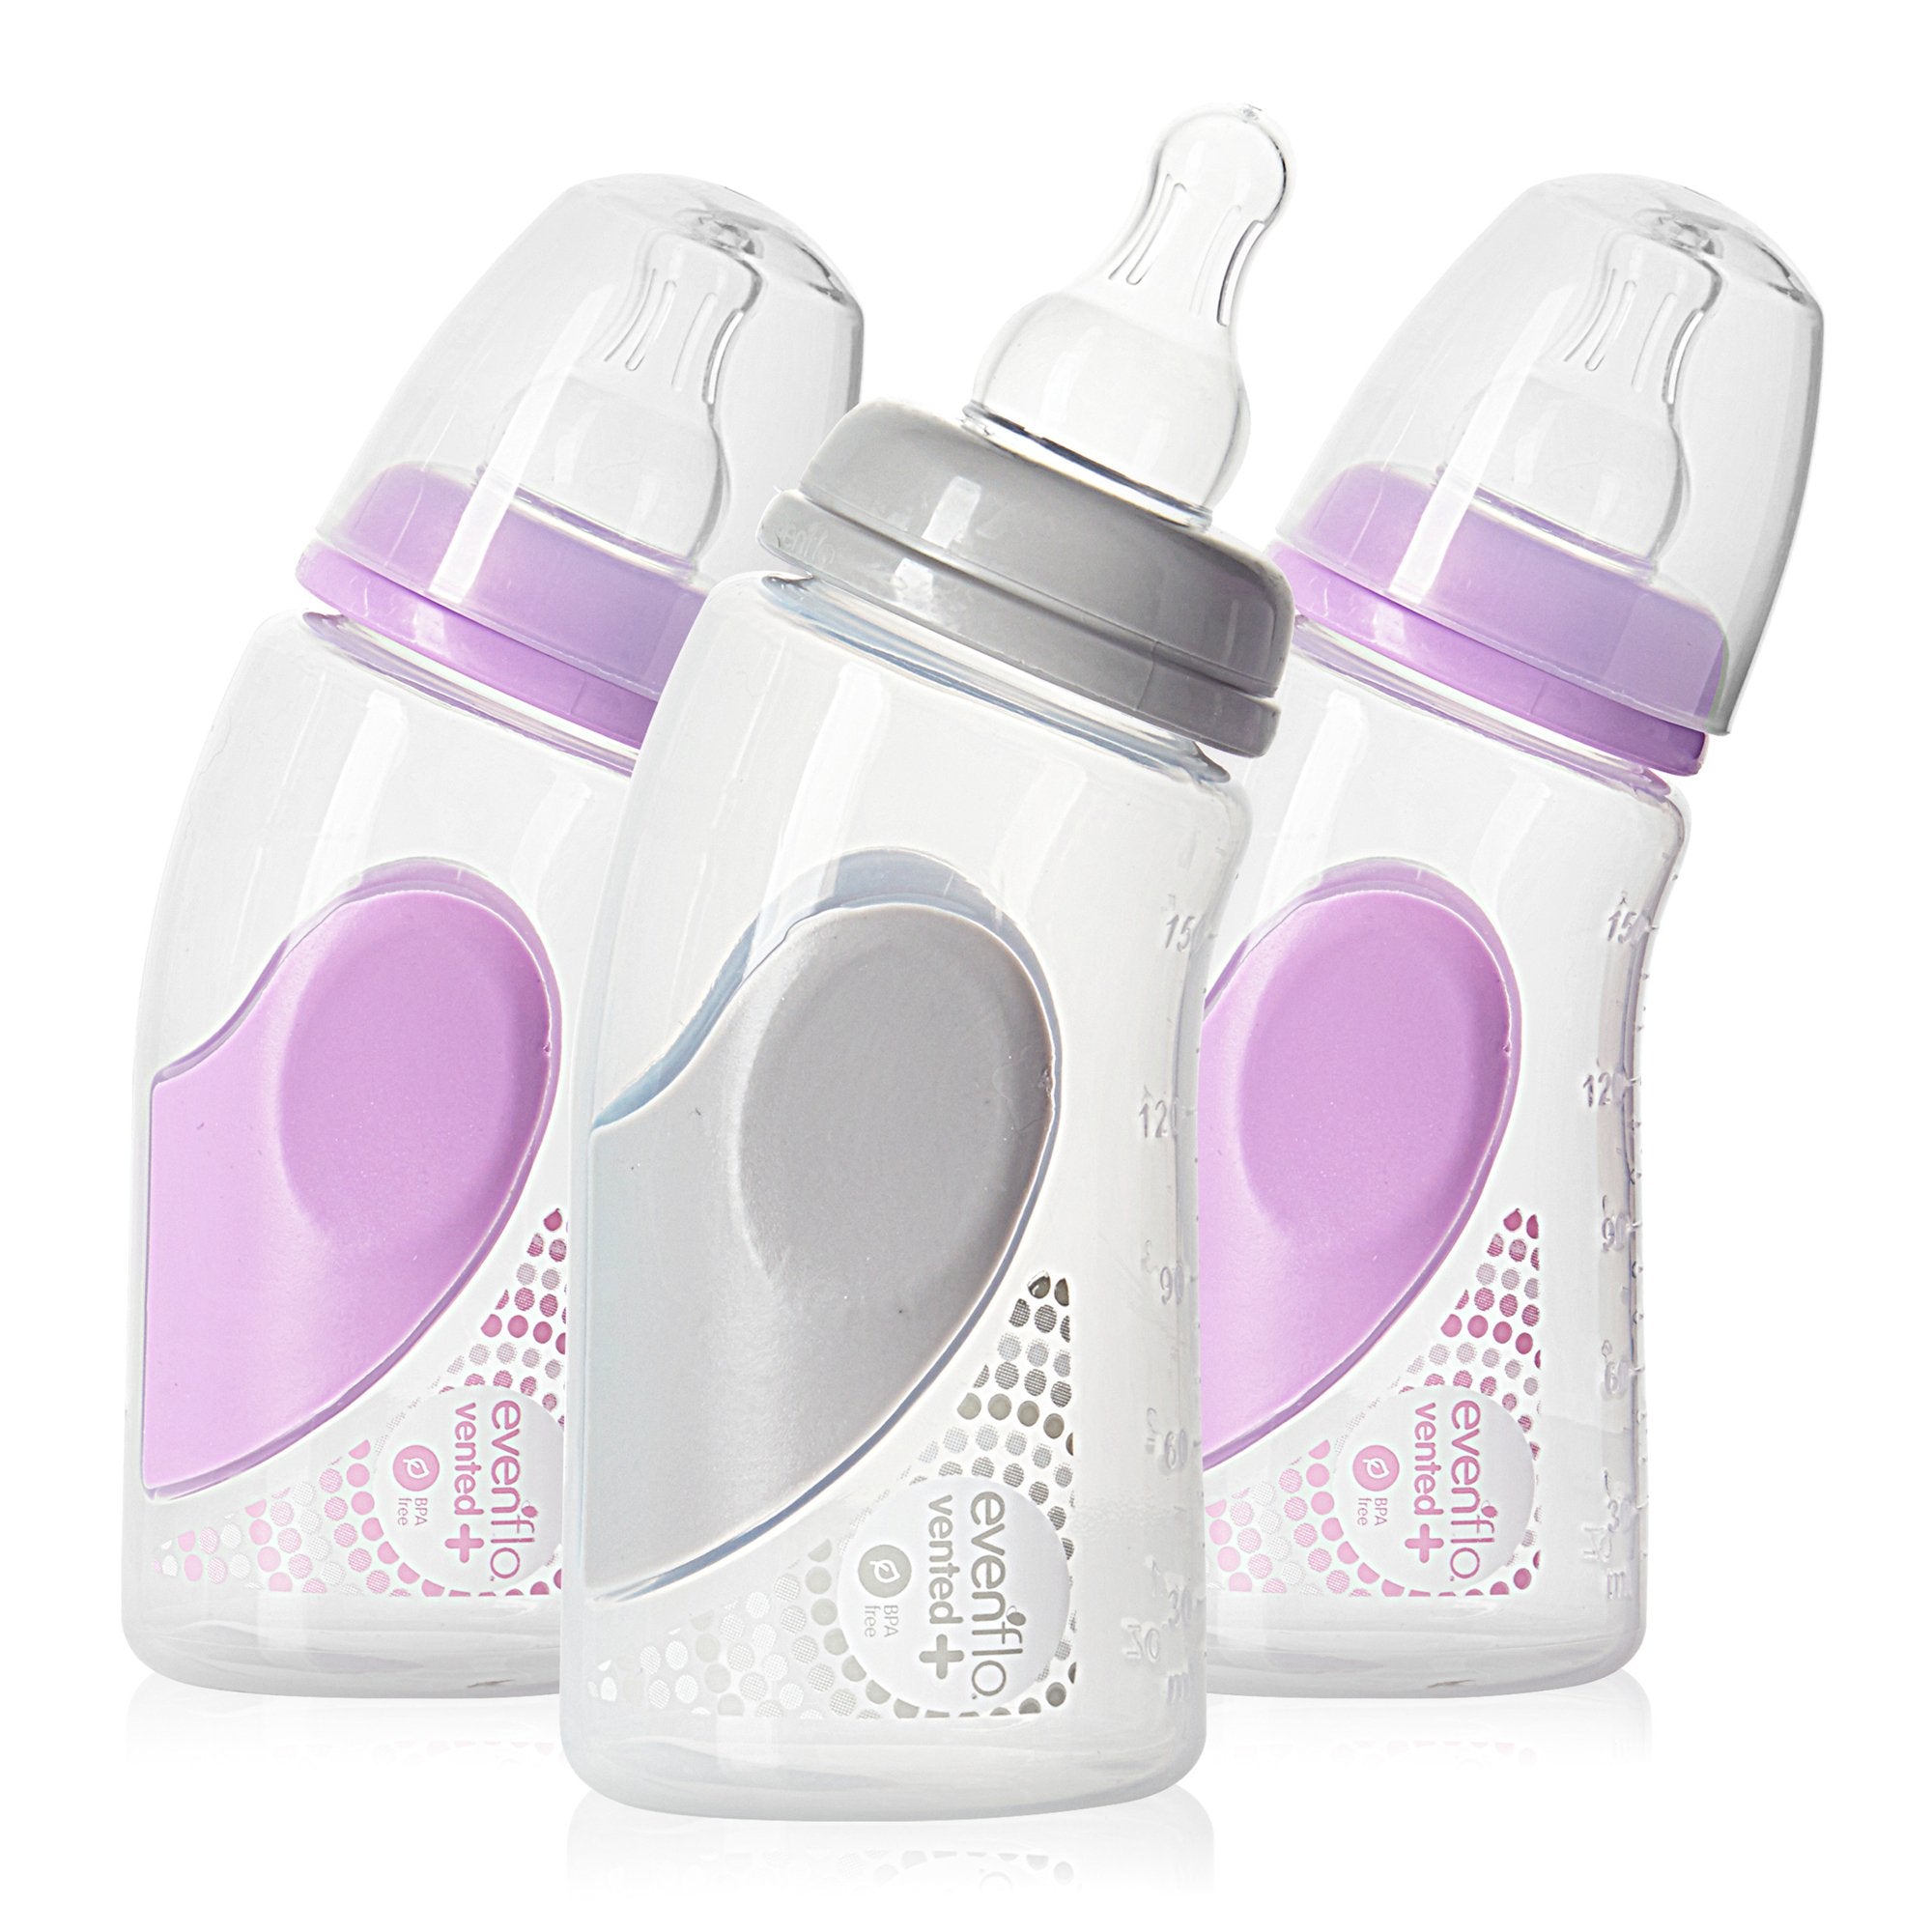 Evenflo Advanced + Baby Bottle, 6 oz. -Case of 12